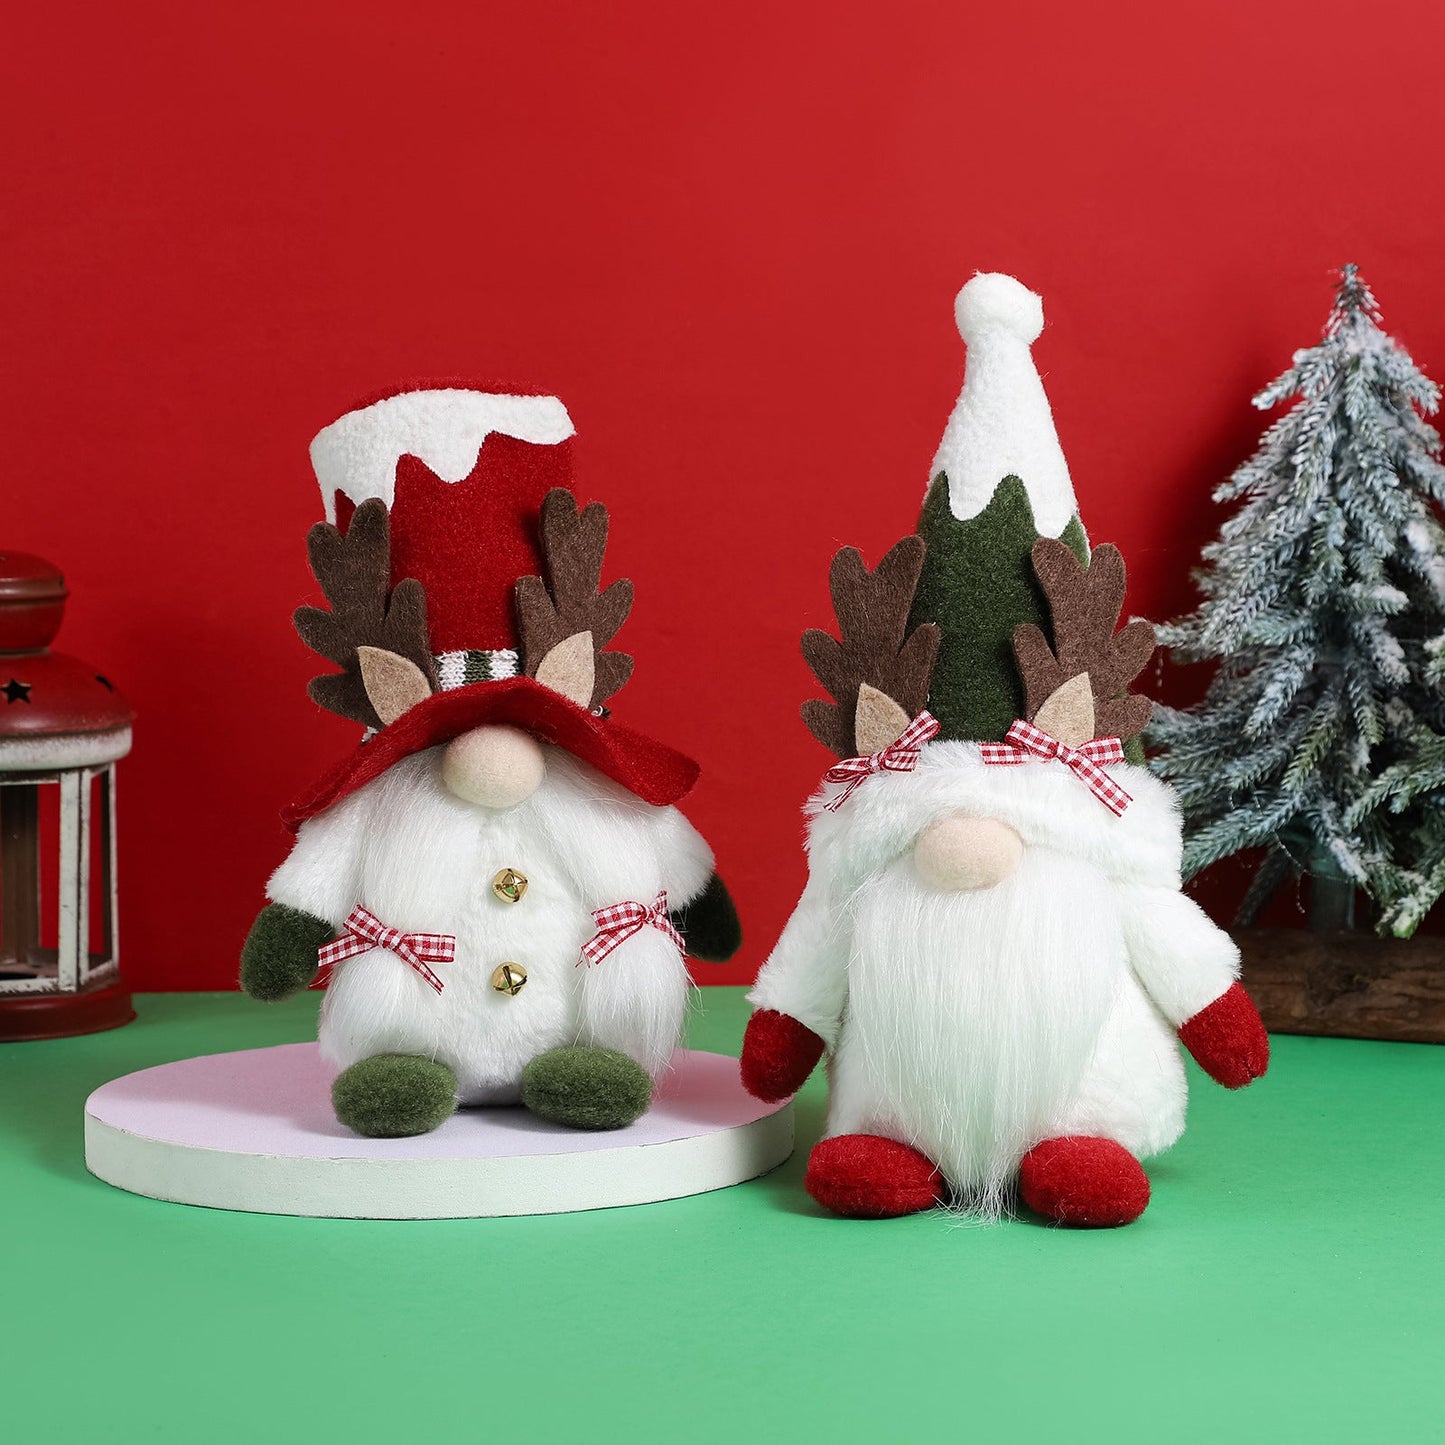 Faceless Dwarf Rudolph Plush Doll Christmas Decorations - TOY-PLU-38901 - YWSYMC - 42shops